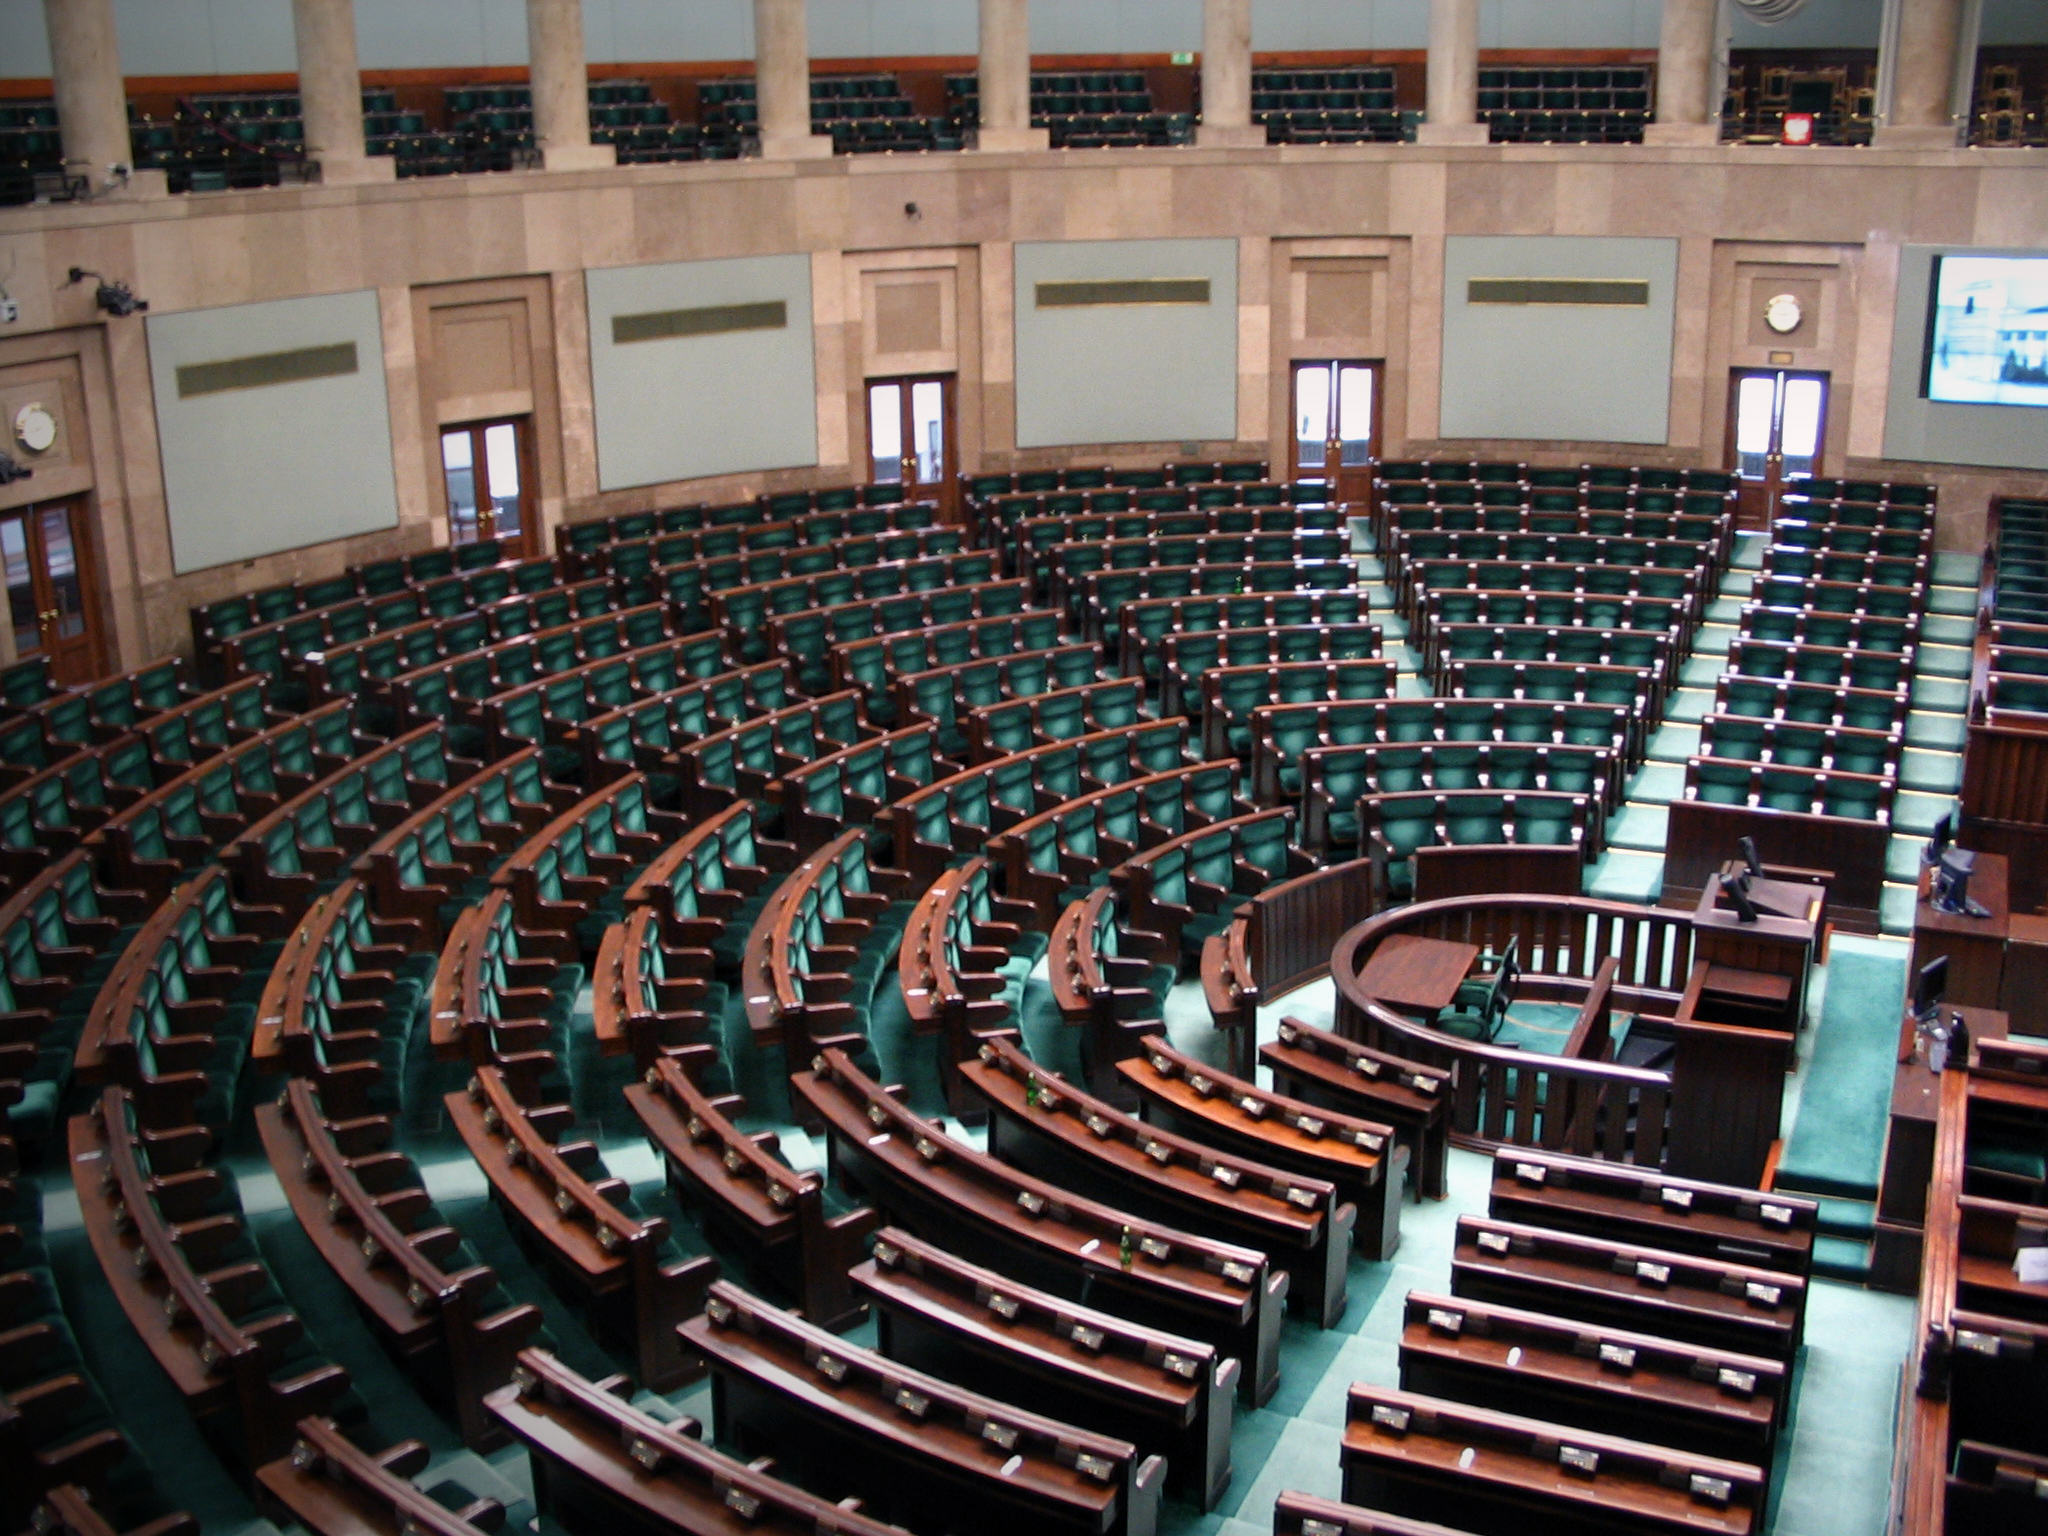 http://upload.wikimedia.org/wikipedia/commons/4/48/Sejm_433.jpg